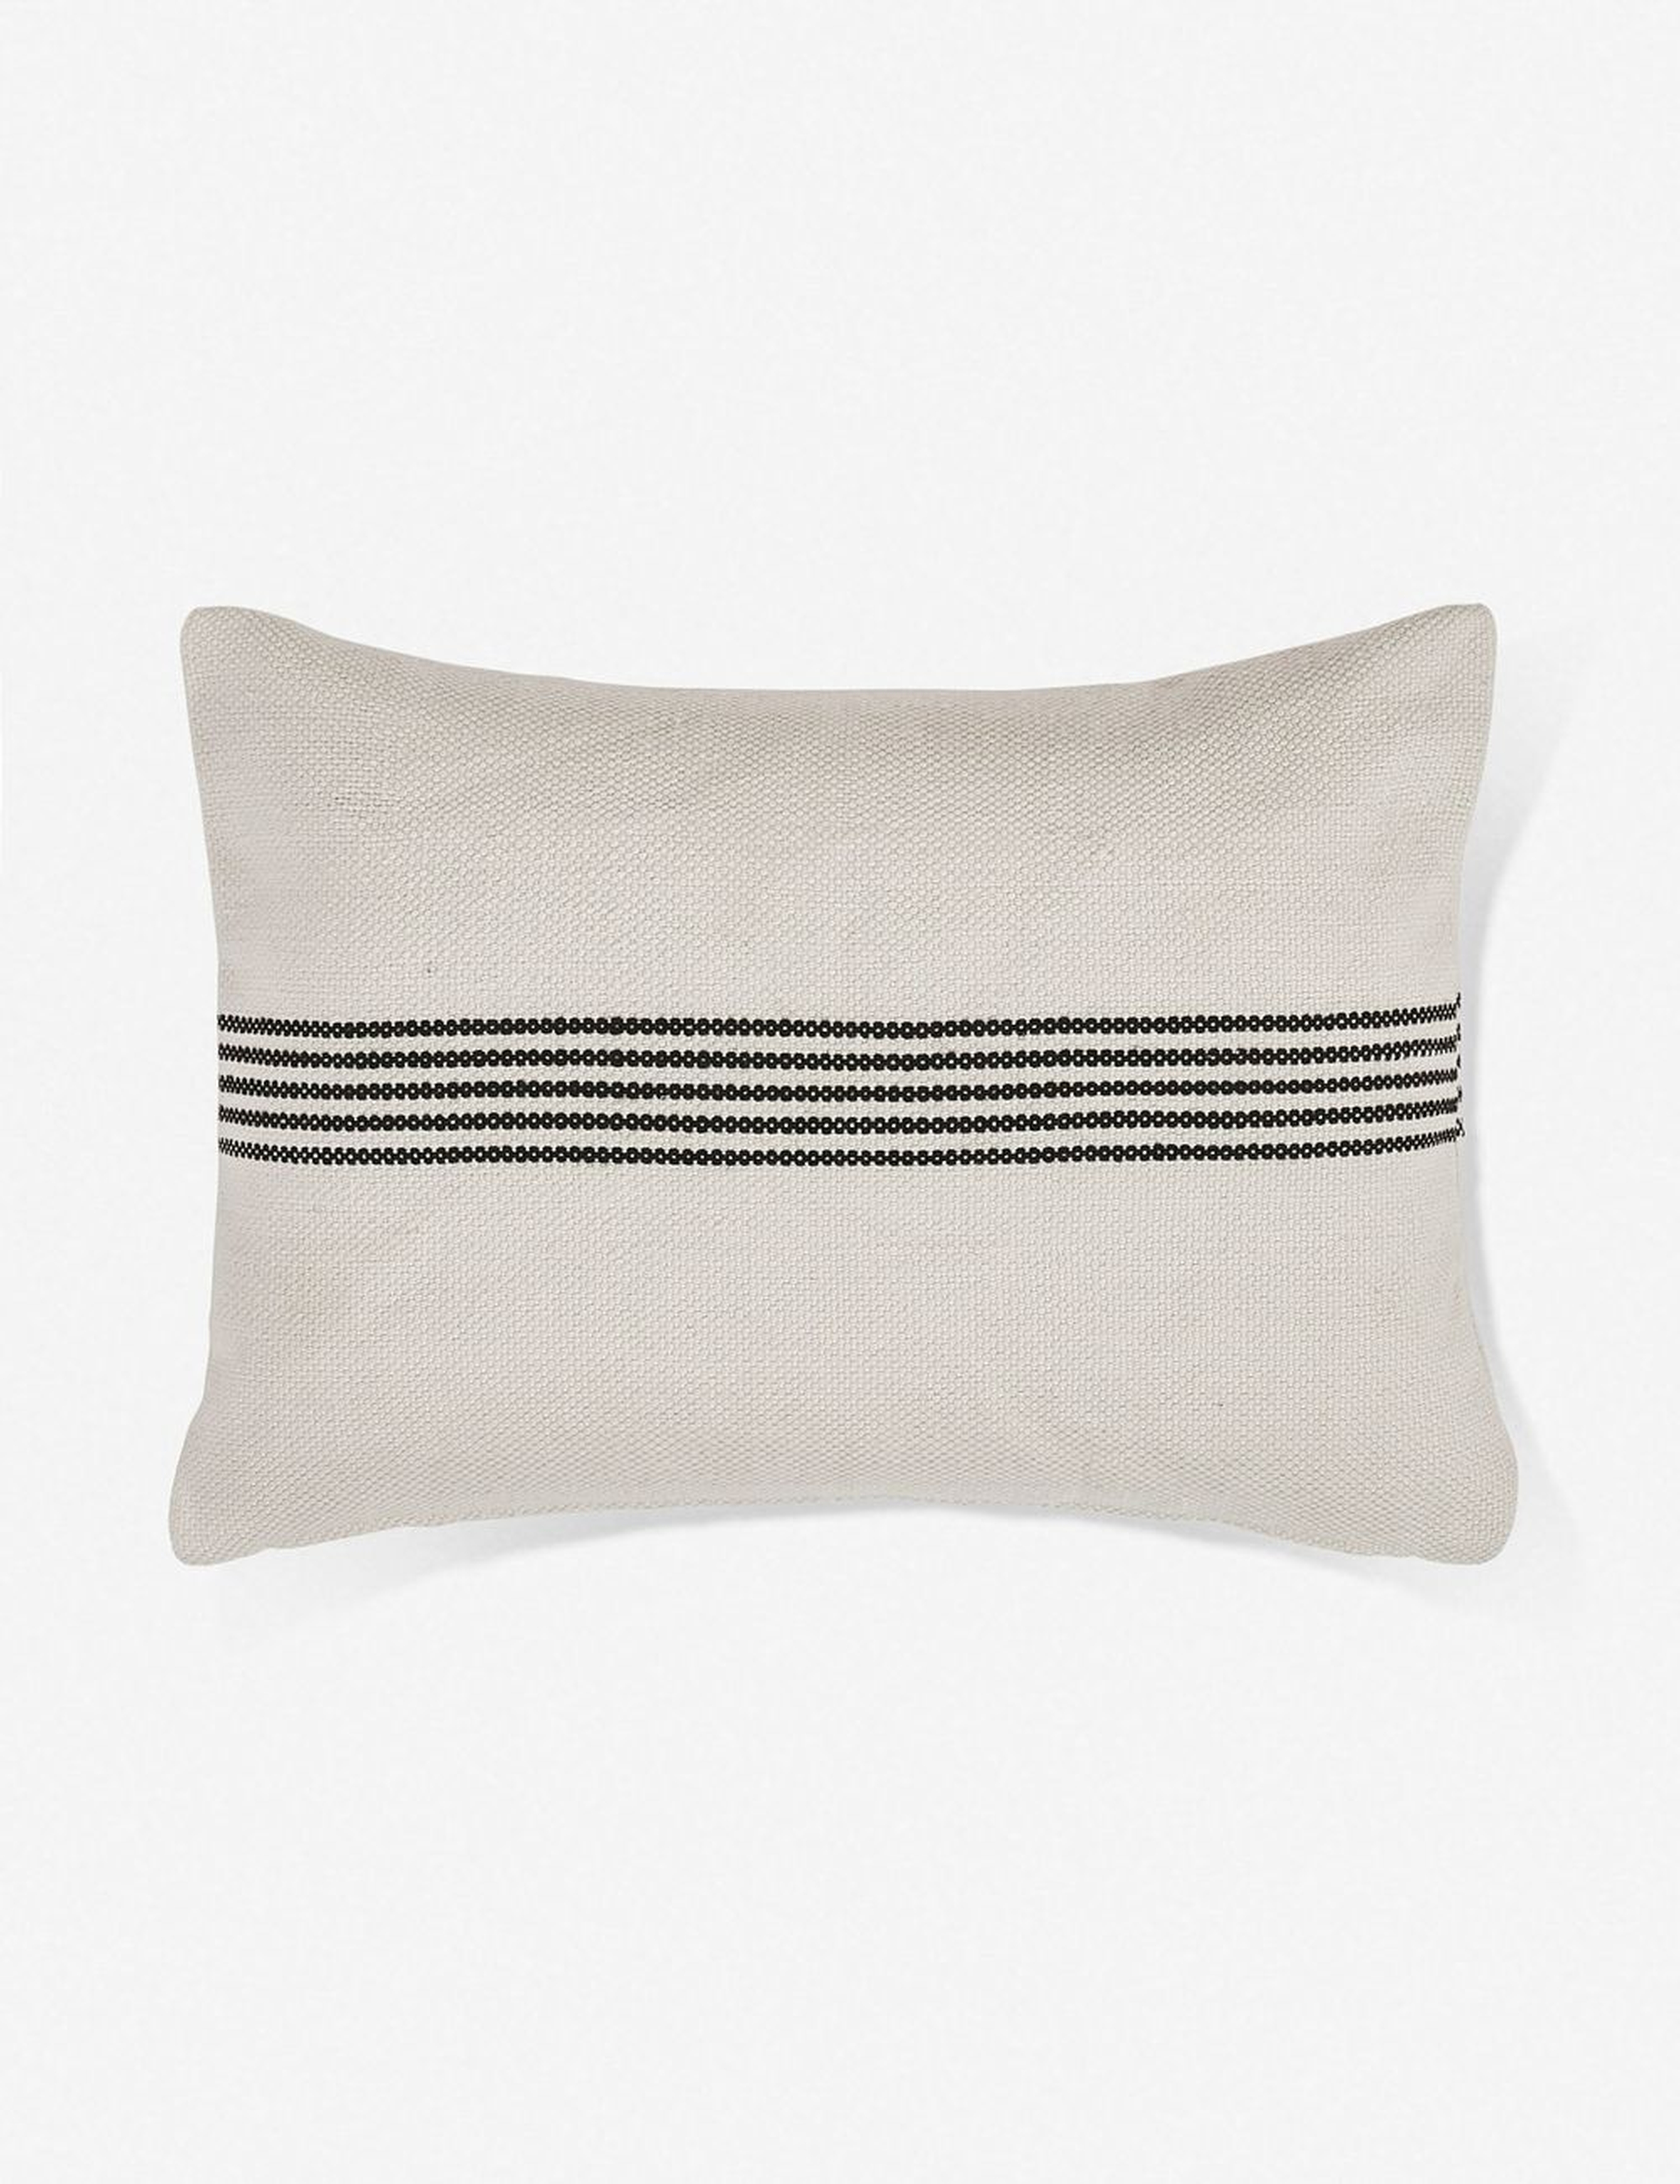 Katya Indoor/Outdoor Lumbar Pillow, Black Stripe, 20" x 14" - Lulu and Georgia